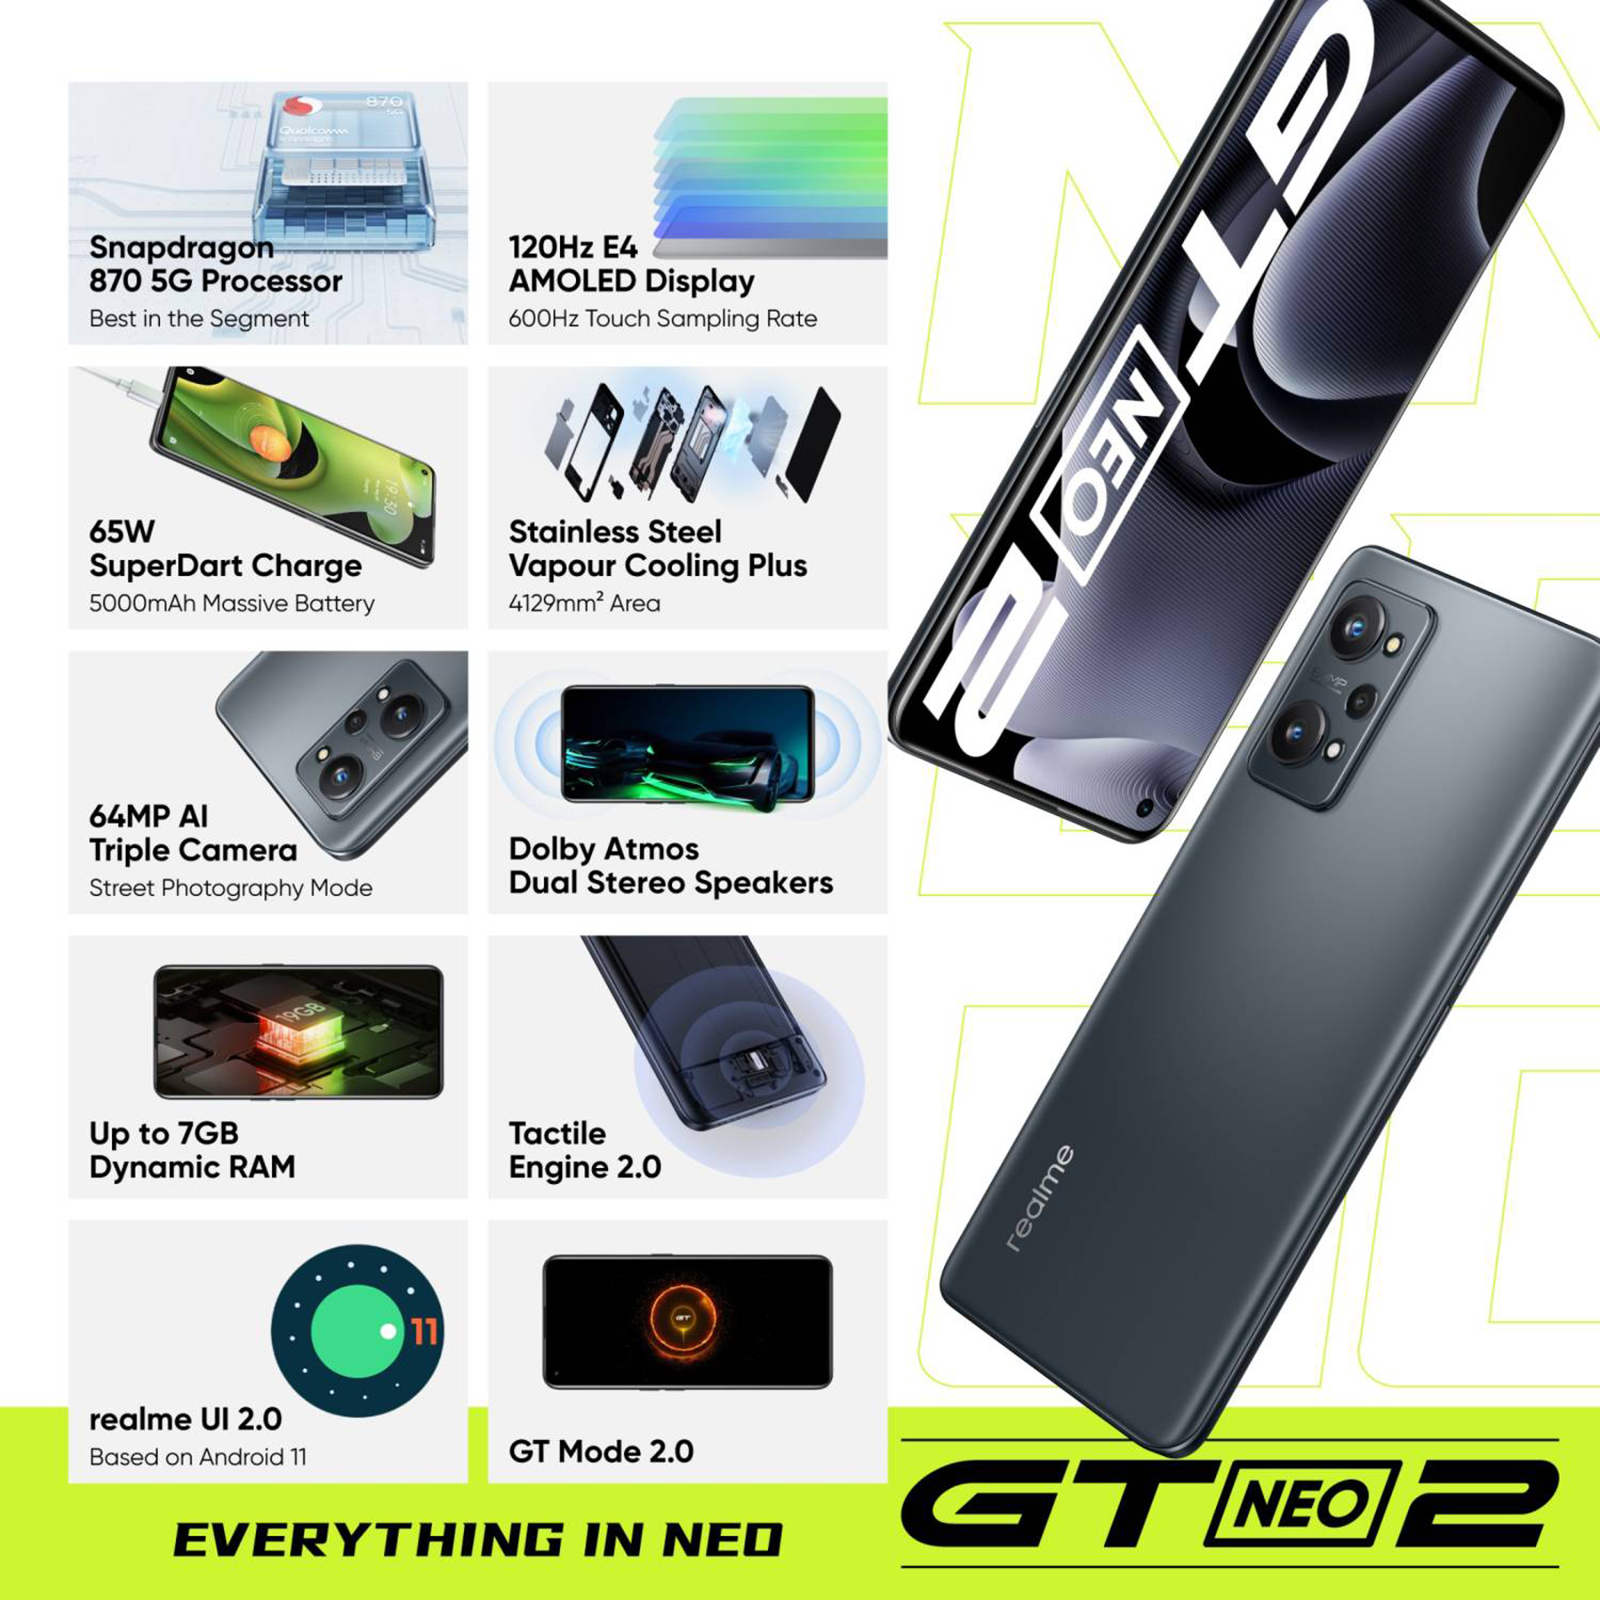 realme GT NEO 2 ( 128 GB Storage, 8 GB RAM ) Online at Best Price On